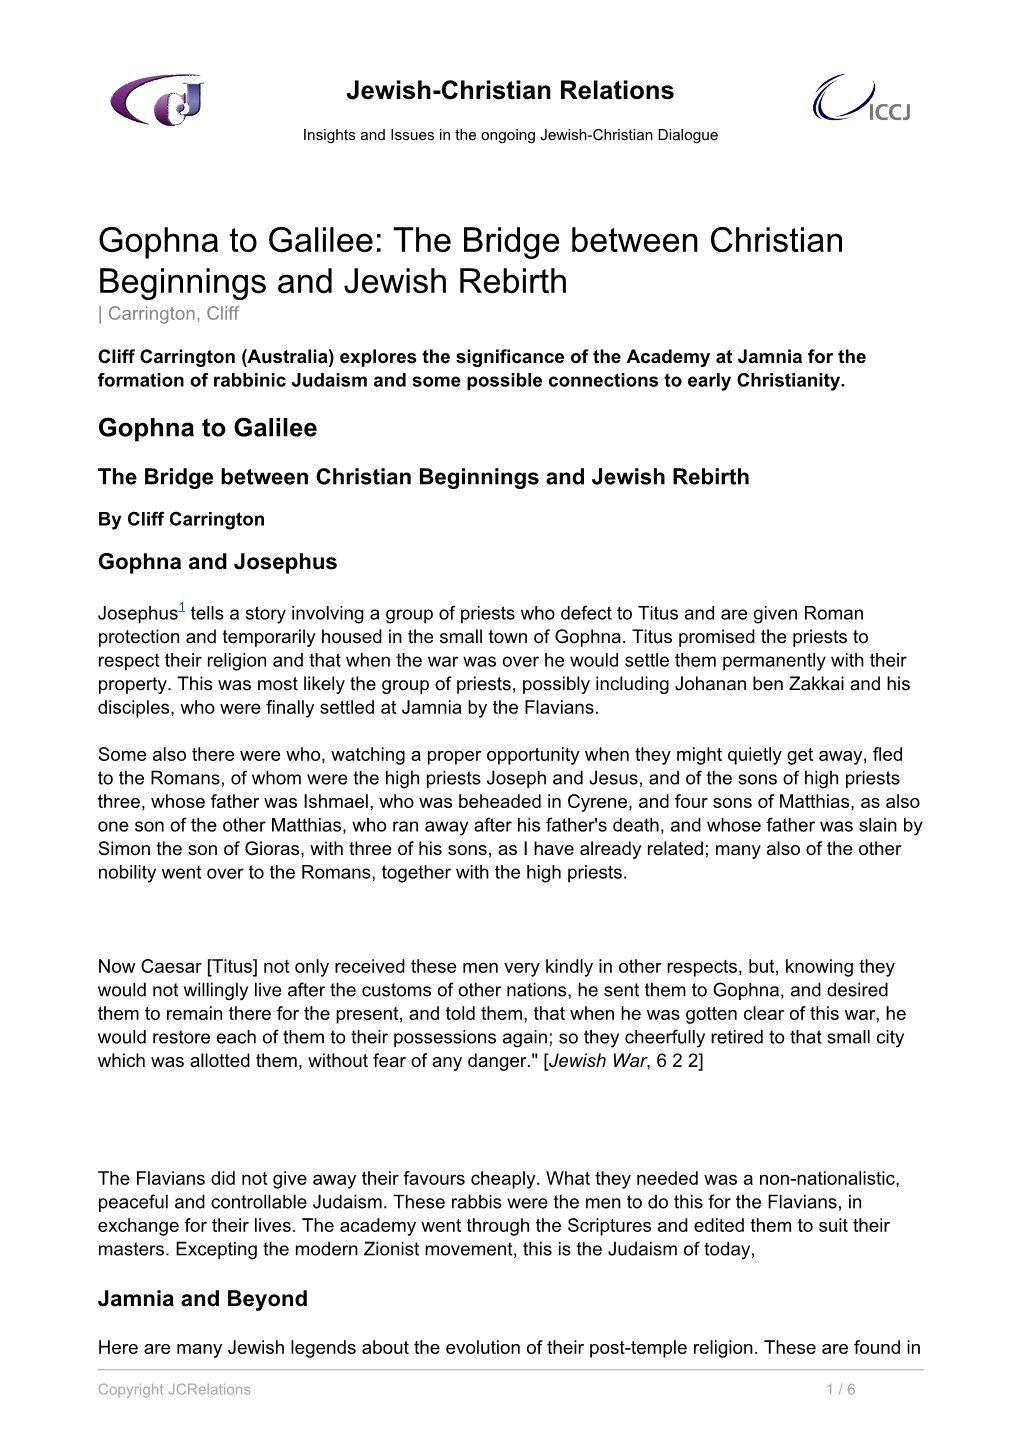 The Bridge Between Christian Beginnings and Jewish Rebirth | Carrington, Cliff